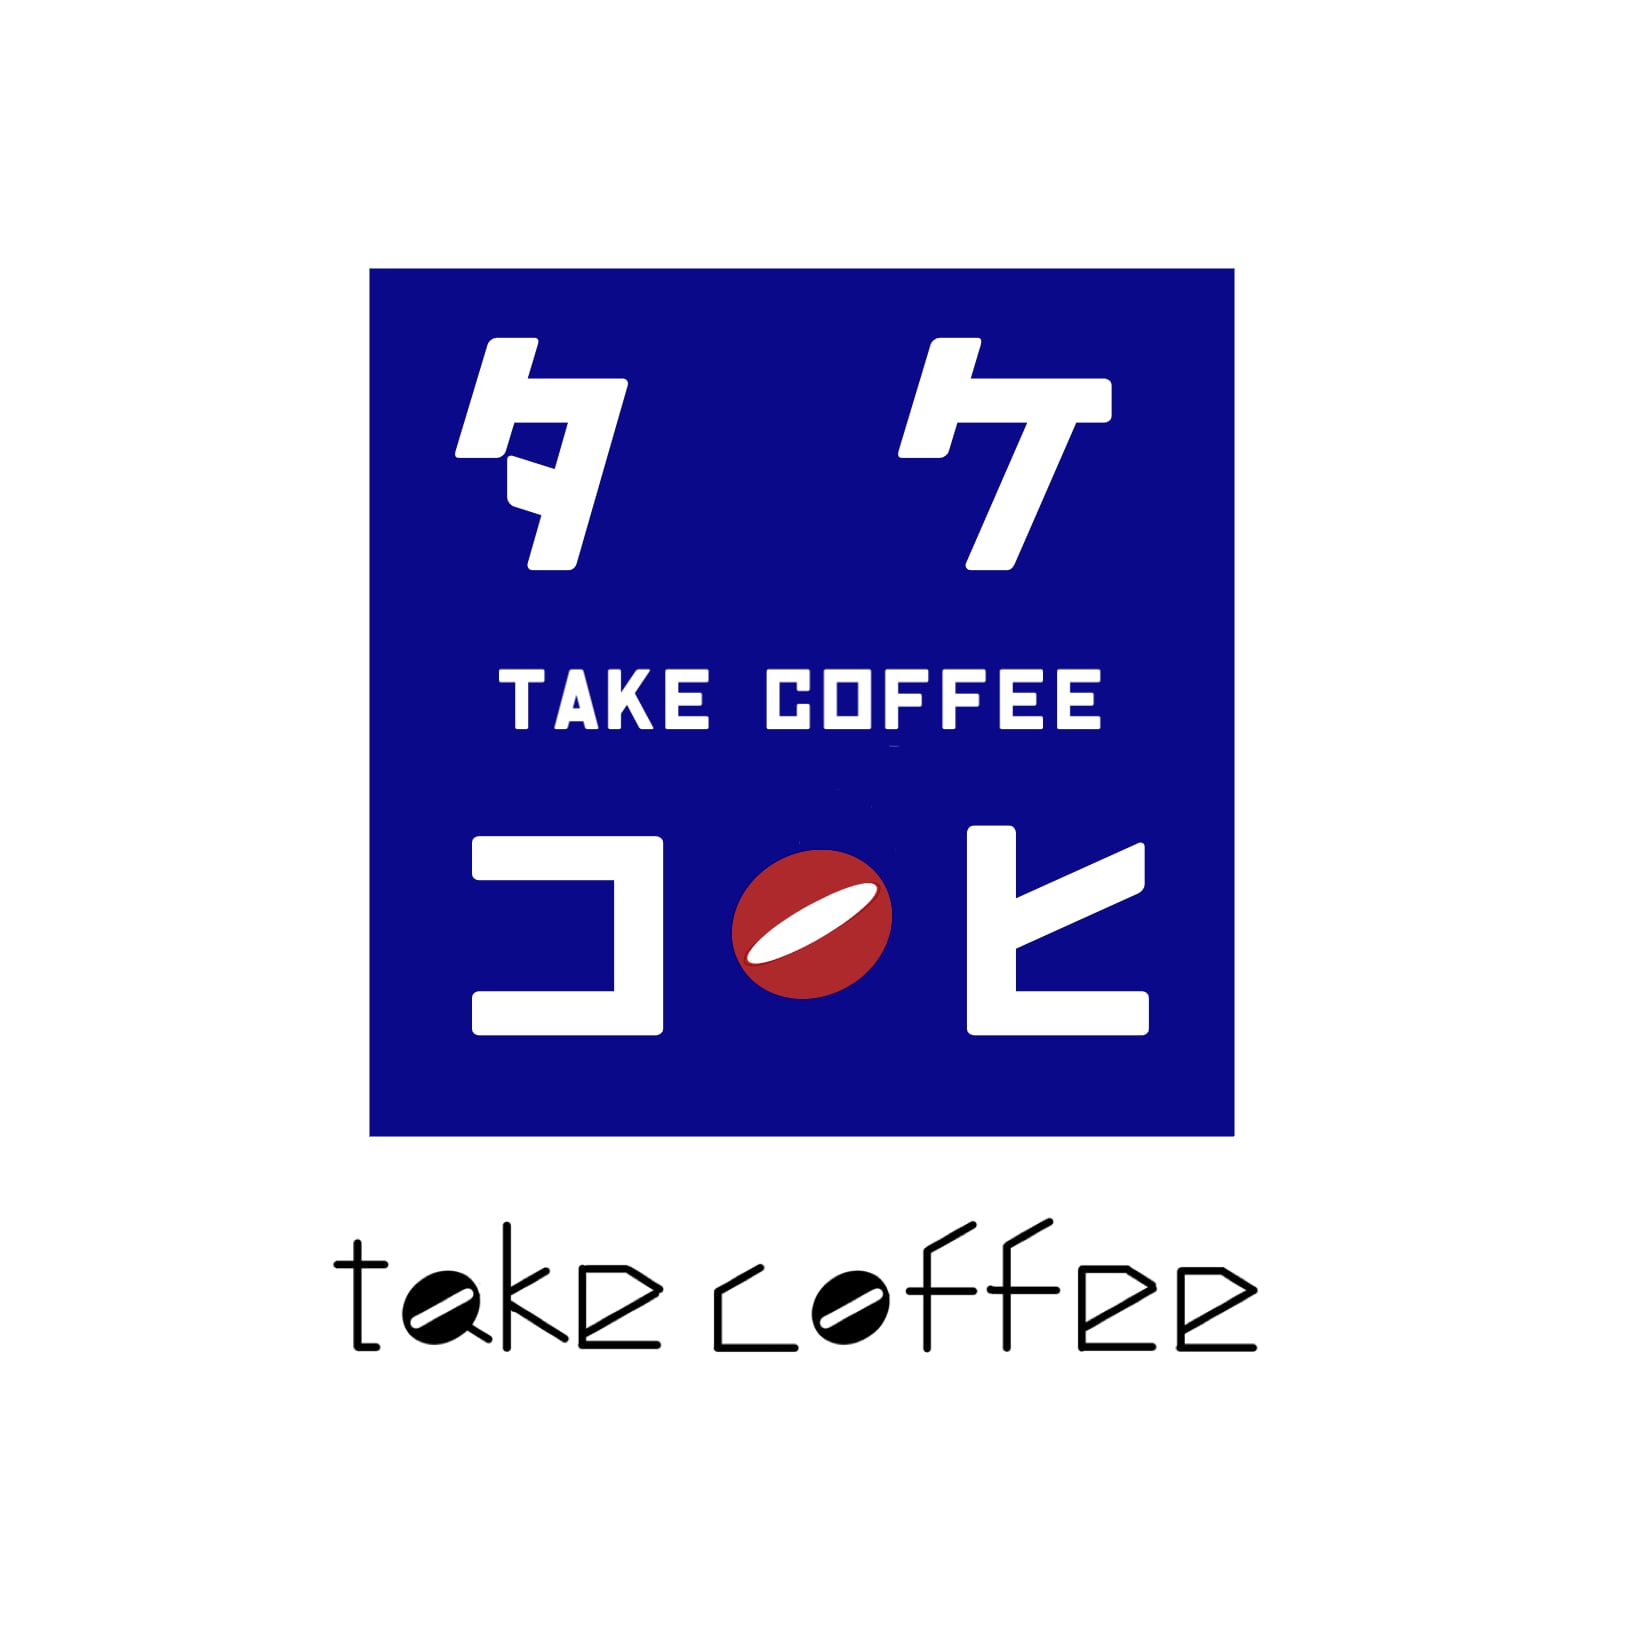 takecoffee